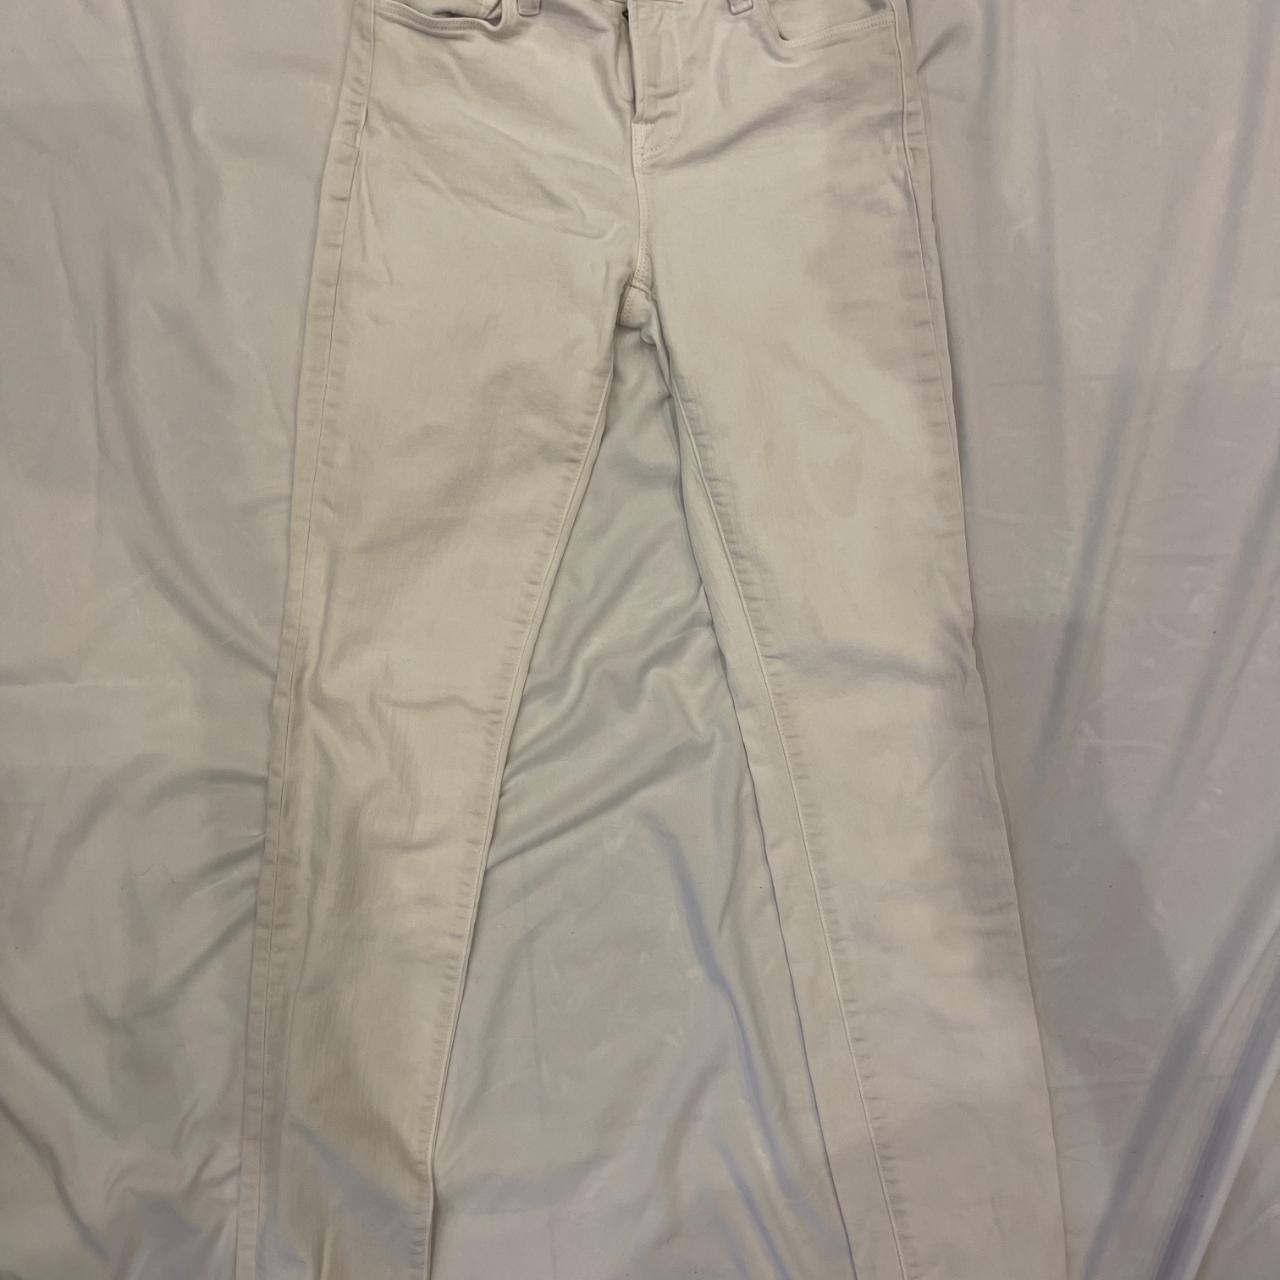 white J brand jeans size 26 skinny - Depop